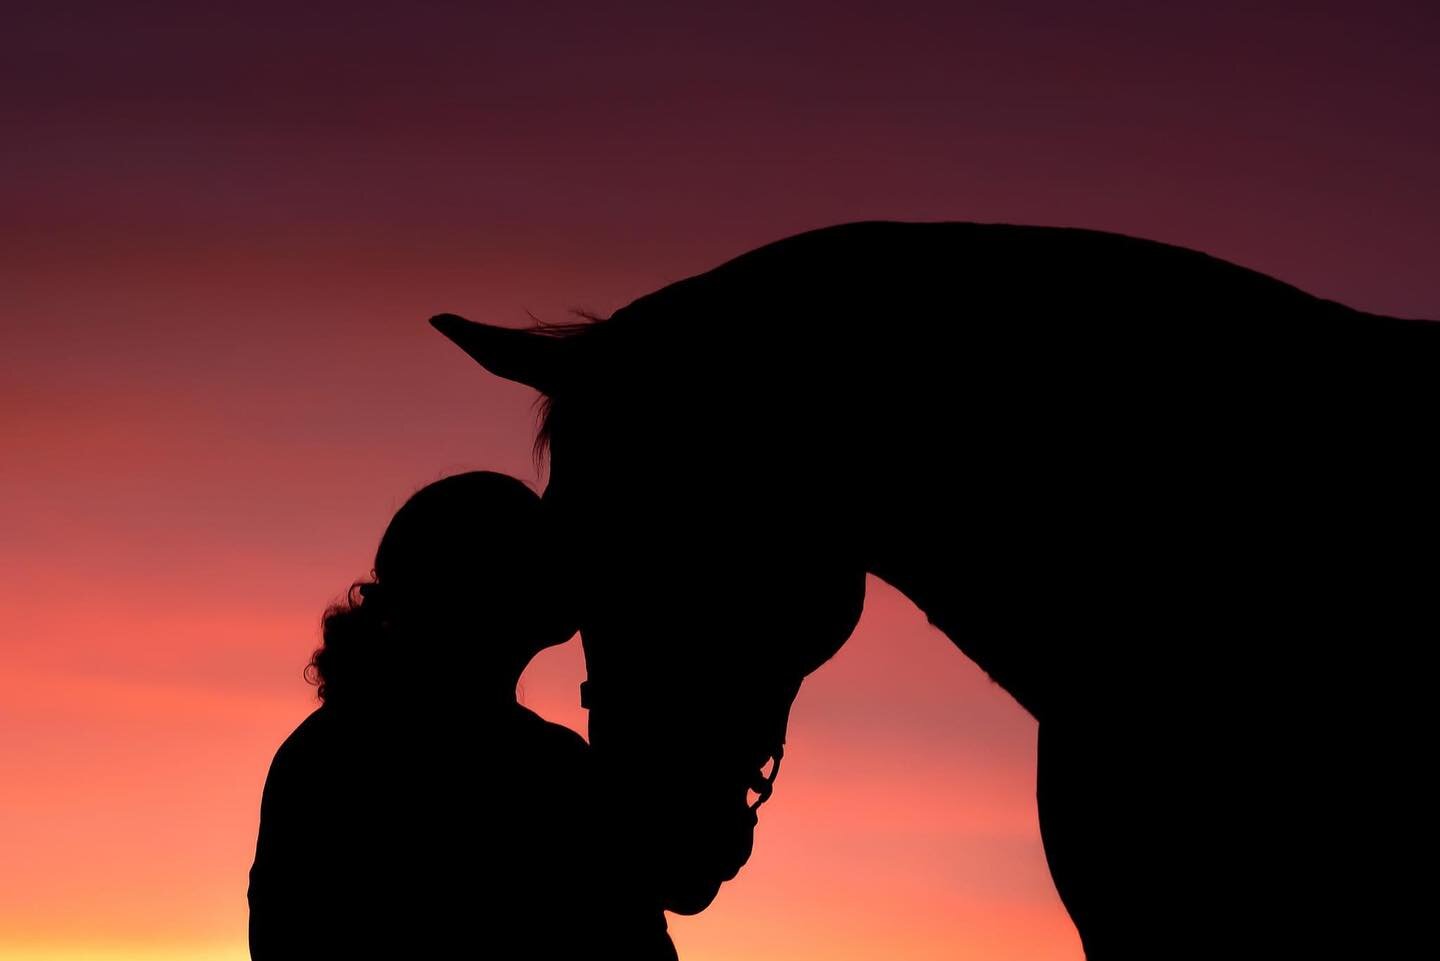 Horse girls vibes forever 🩷

@myruggeddestiny My Rugged Destiny AQHA stallion 

#horses #horsegirlenergy #equestrian #equine #equinephotography #equestrianlife #equestrianstyle #horsephotographer #equestrianphotography #horsegirl #lovemyhorse #horse